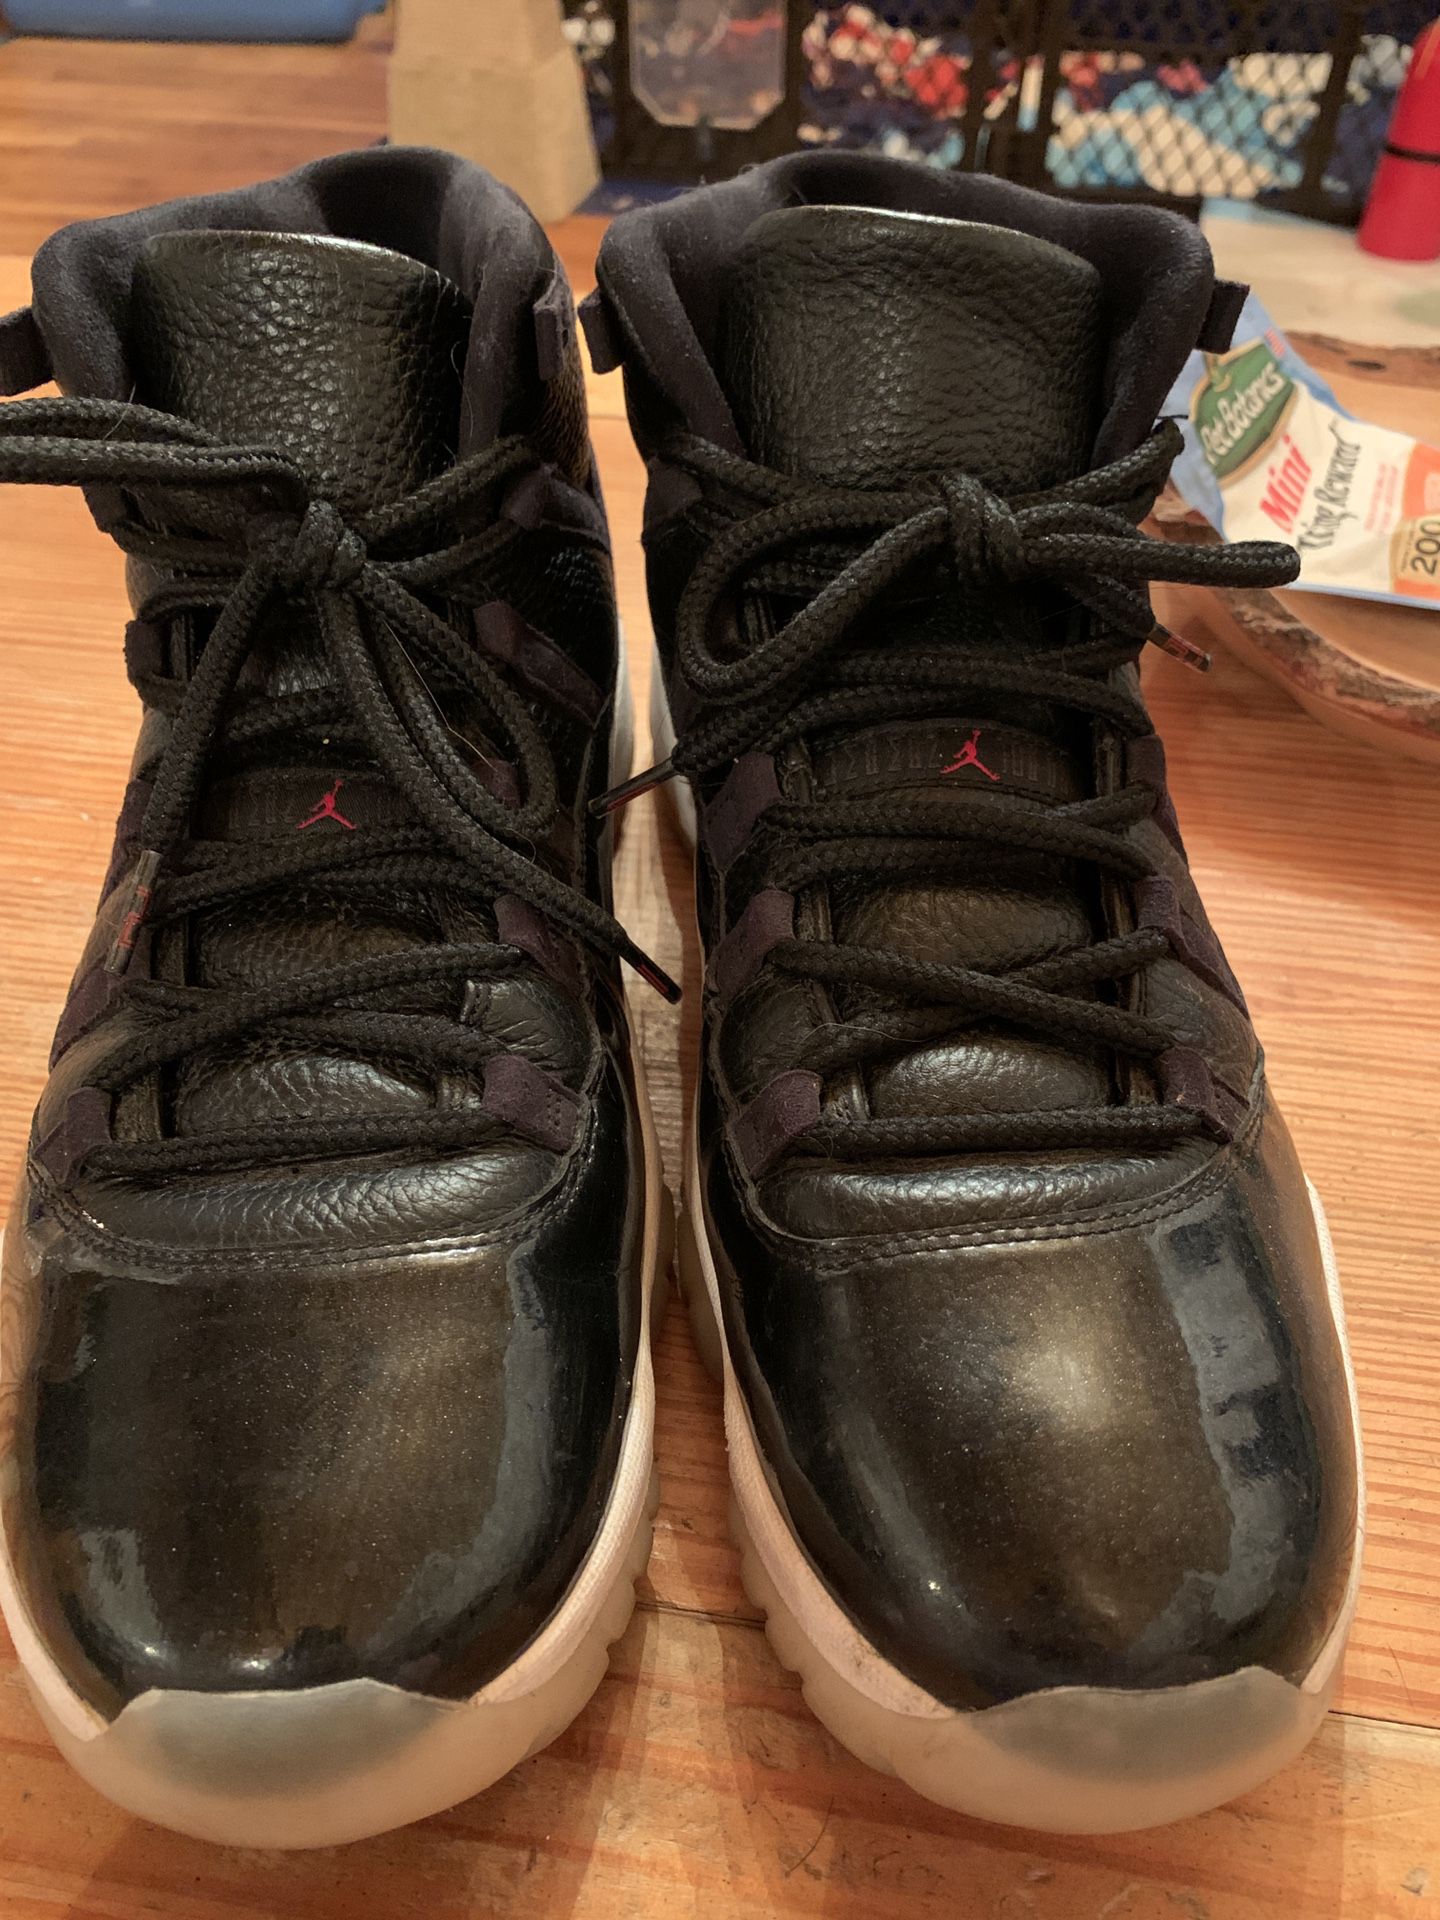 Nike Air Jordan 11 Retro 72-10 Size 12